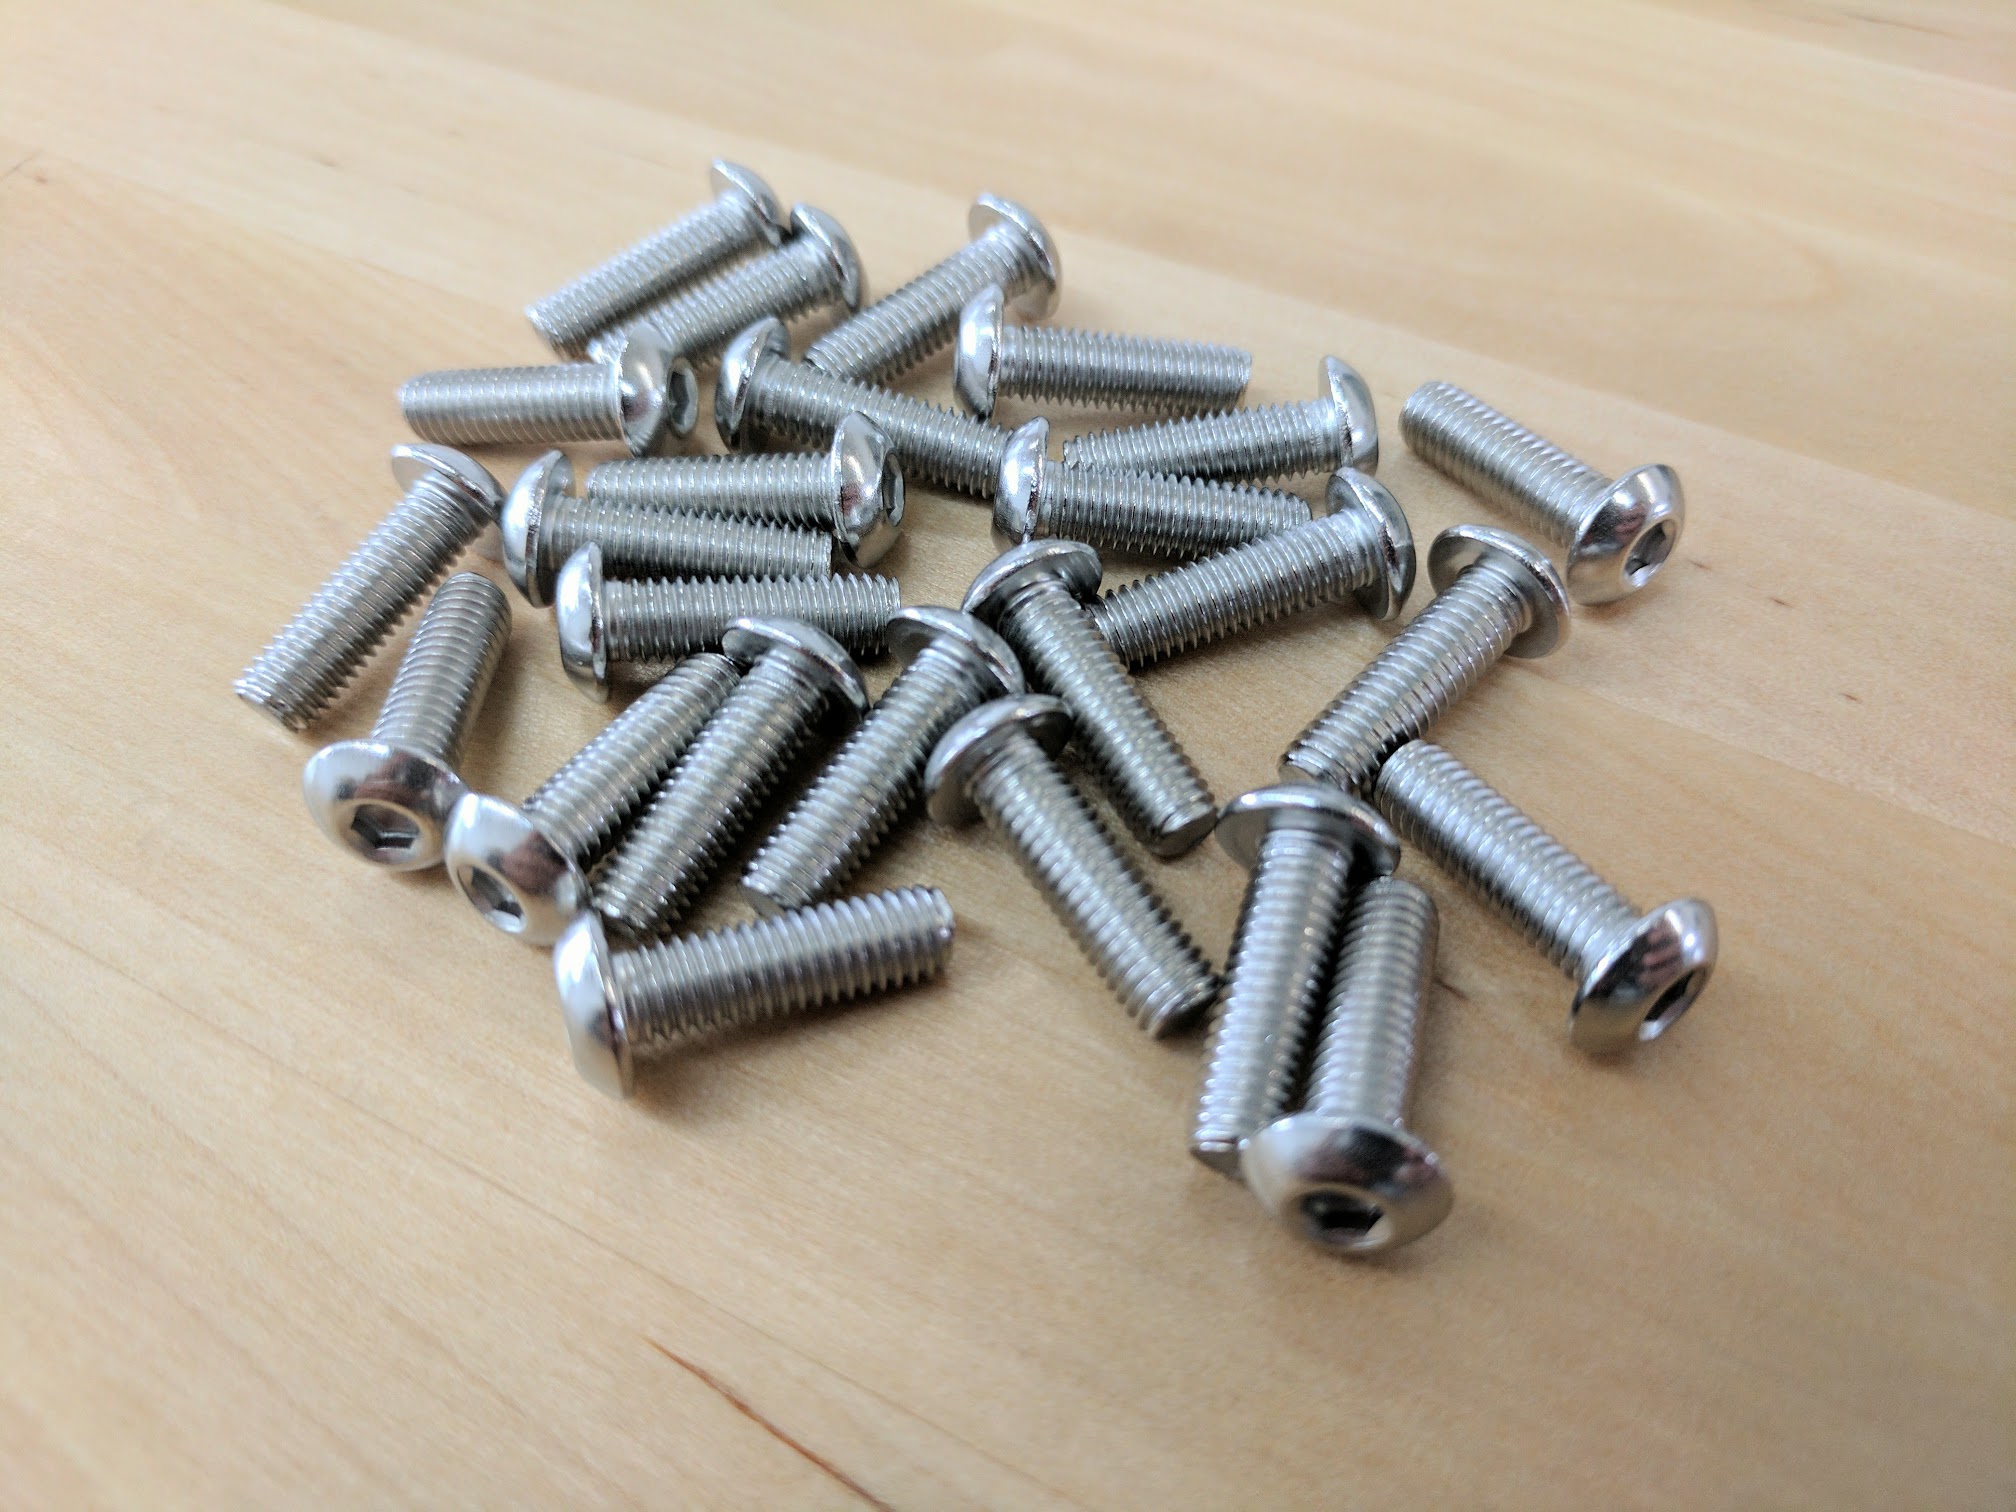 M5x16 screws